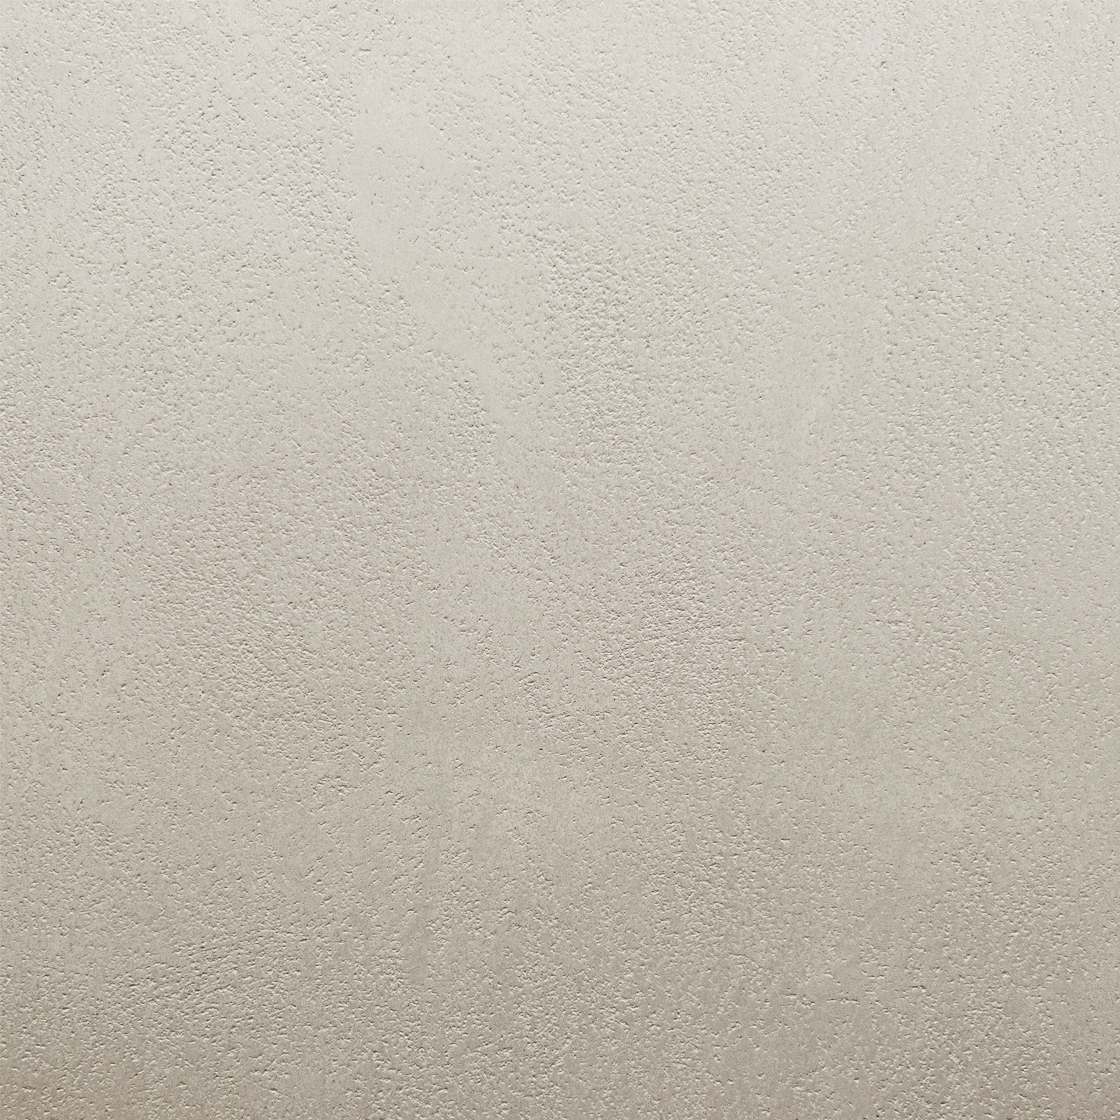 Close up of Armourcoat leatherstone exterior polished plaster finish - 09